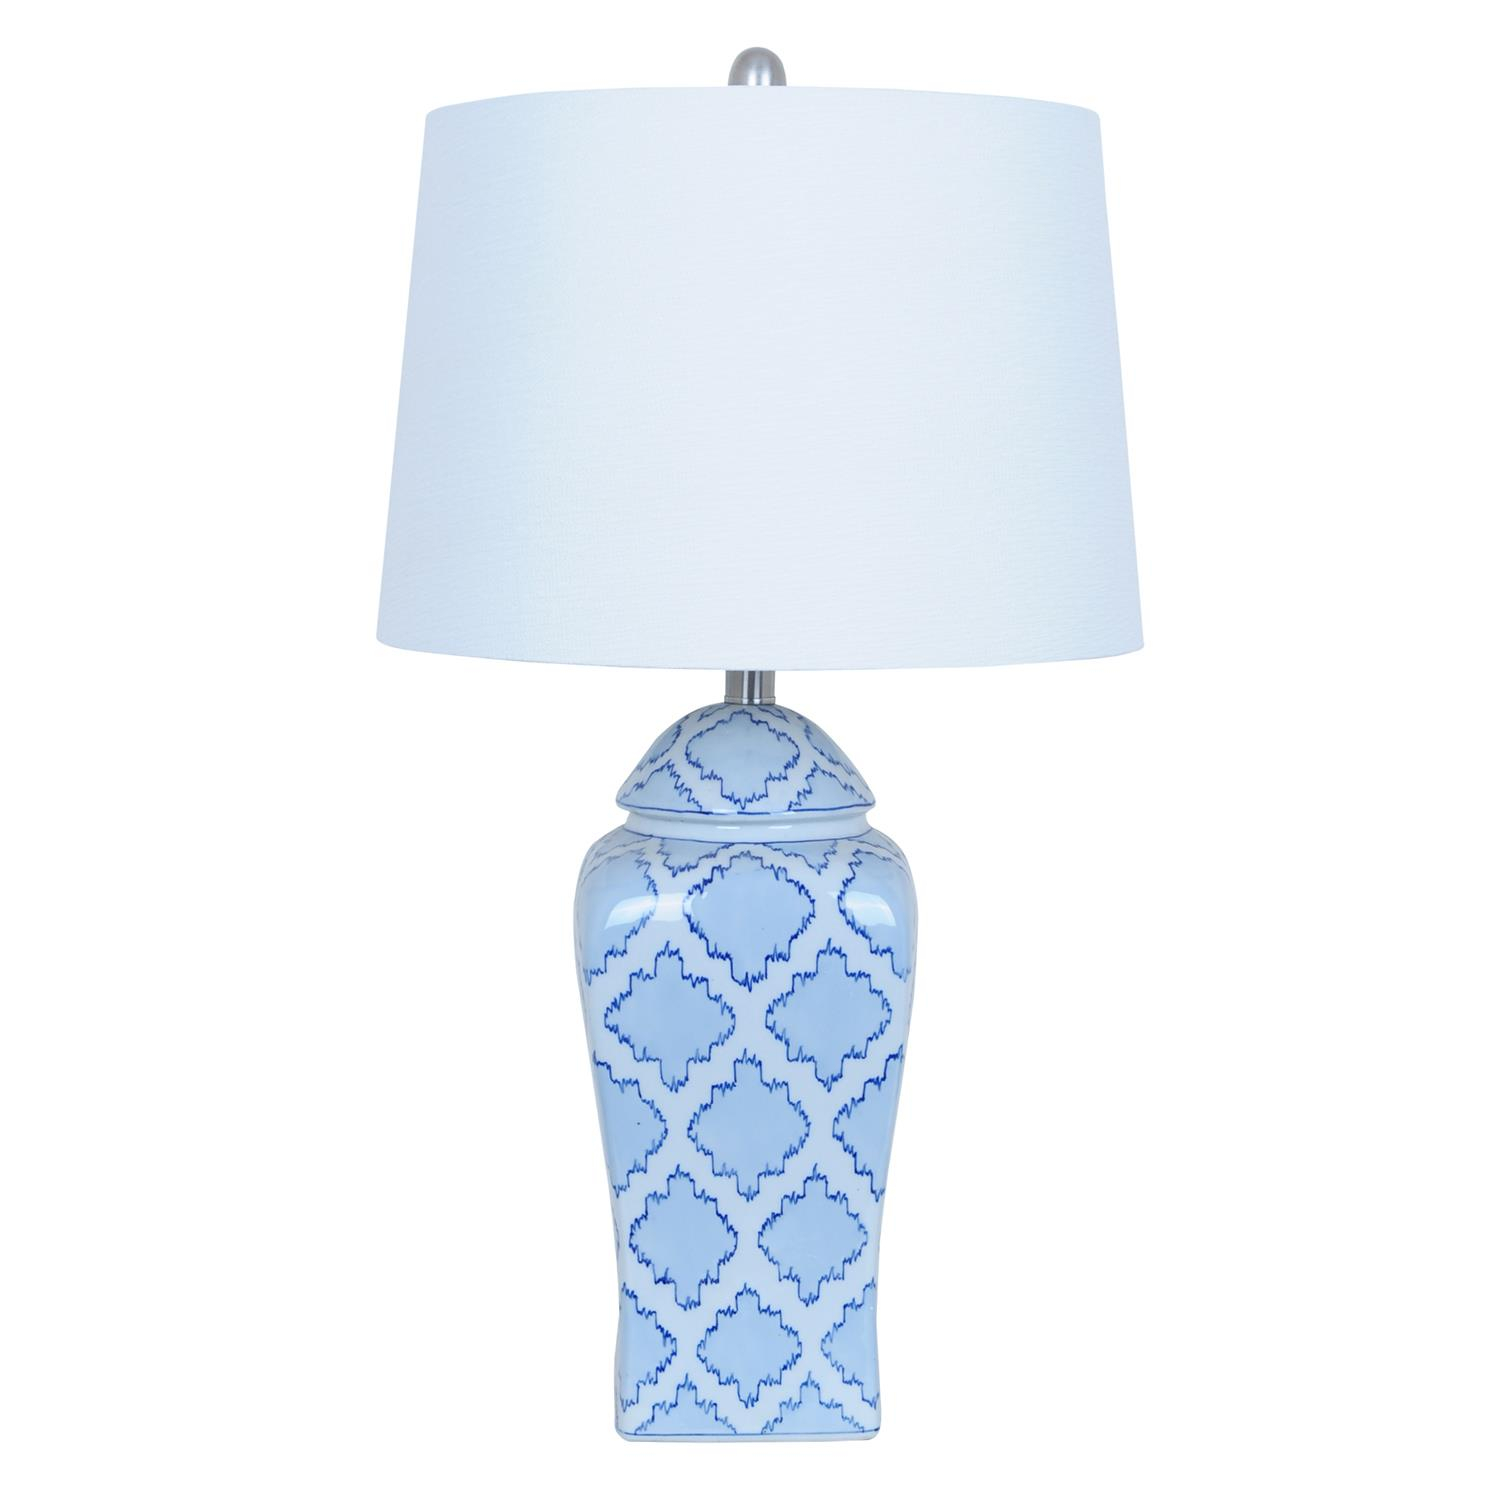 Gringe Jar 27 Inch Table Lamp Blue Mosaic Walmart in dimensions 1500 X 1500